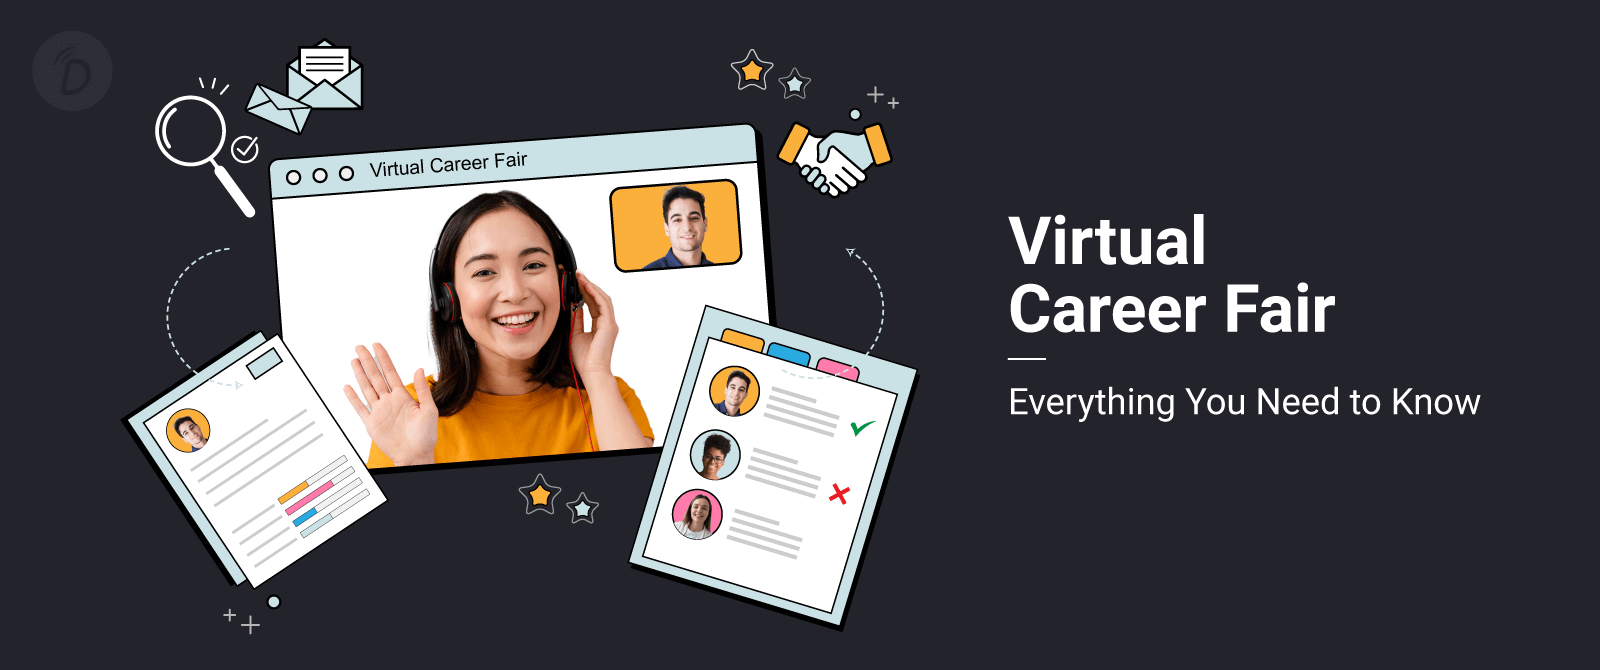 Virtual Career Fair – Everything You Need to Know